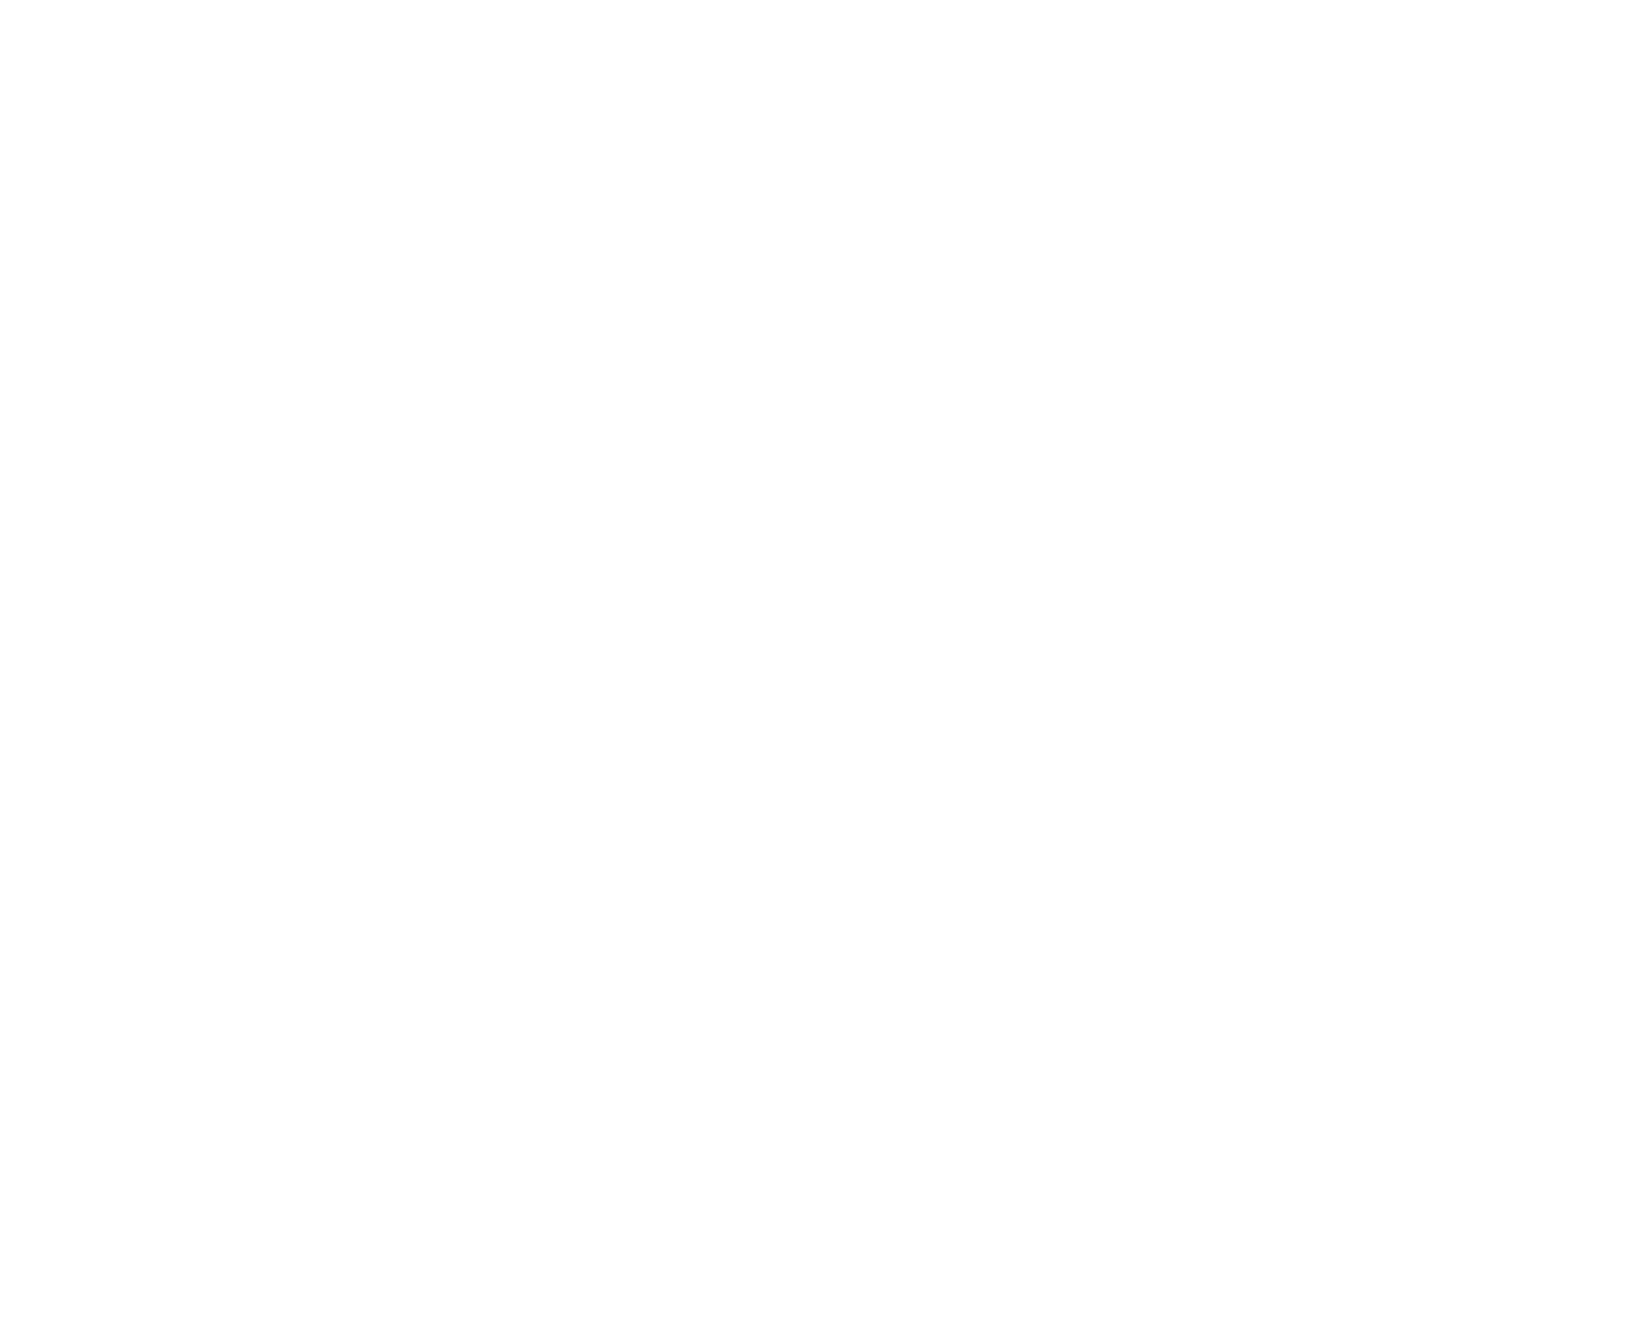 Neo Vision